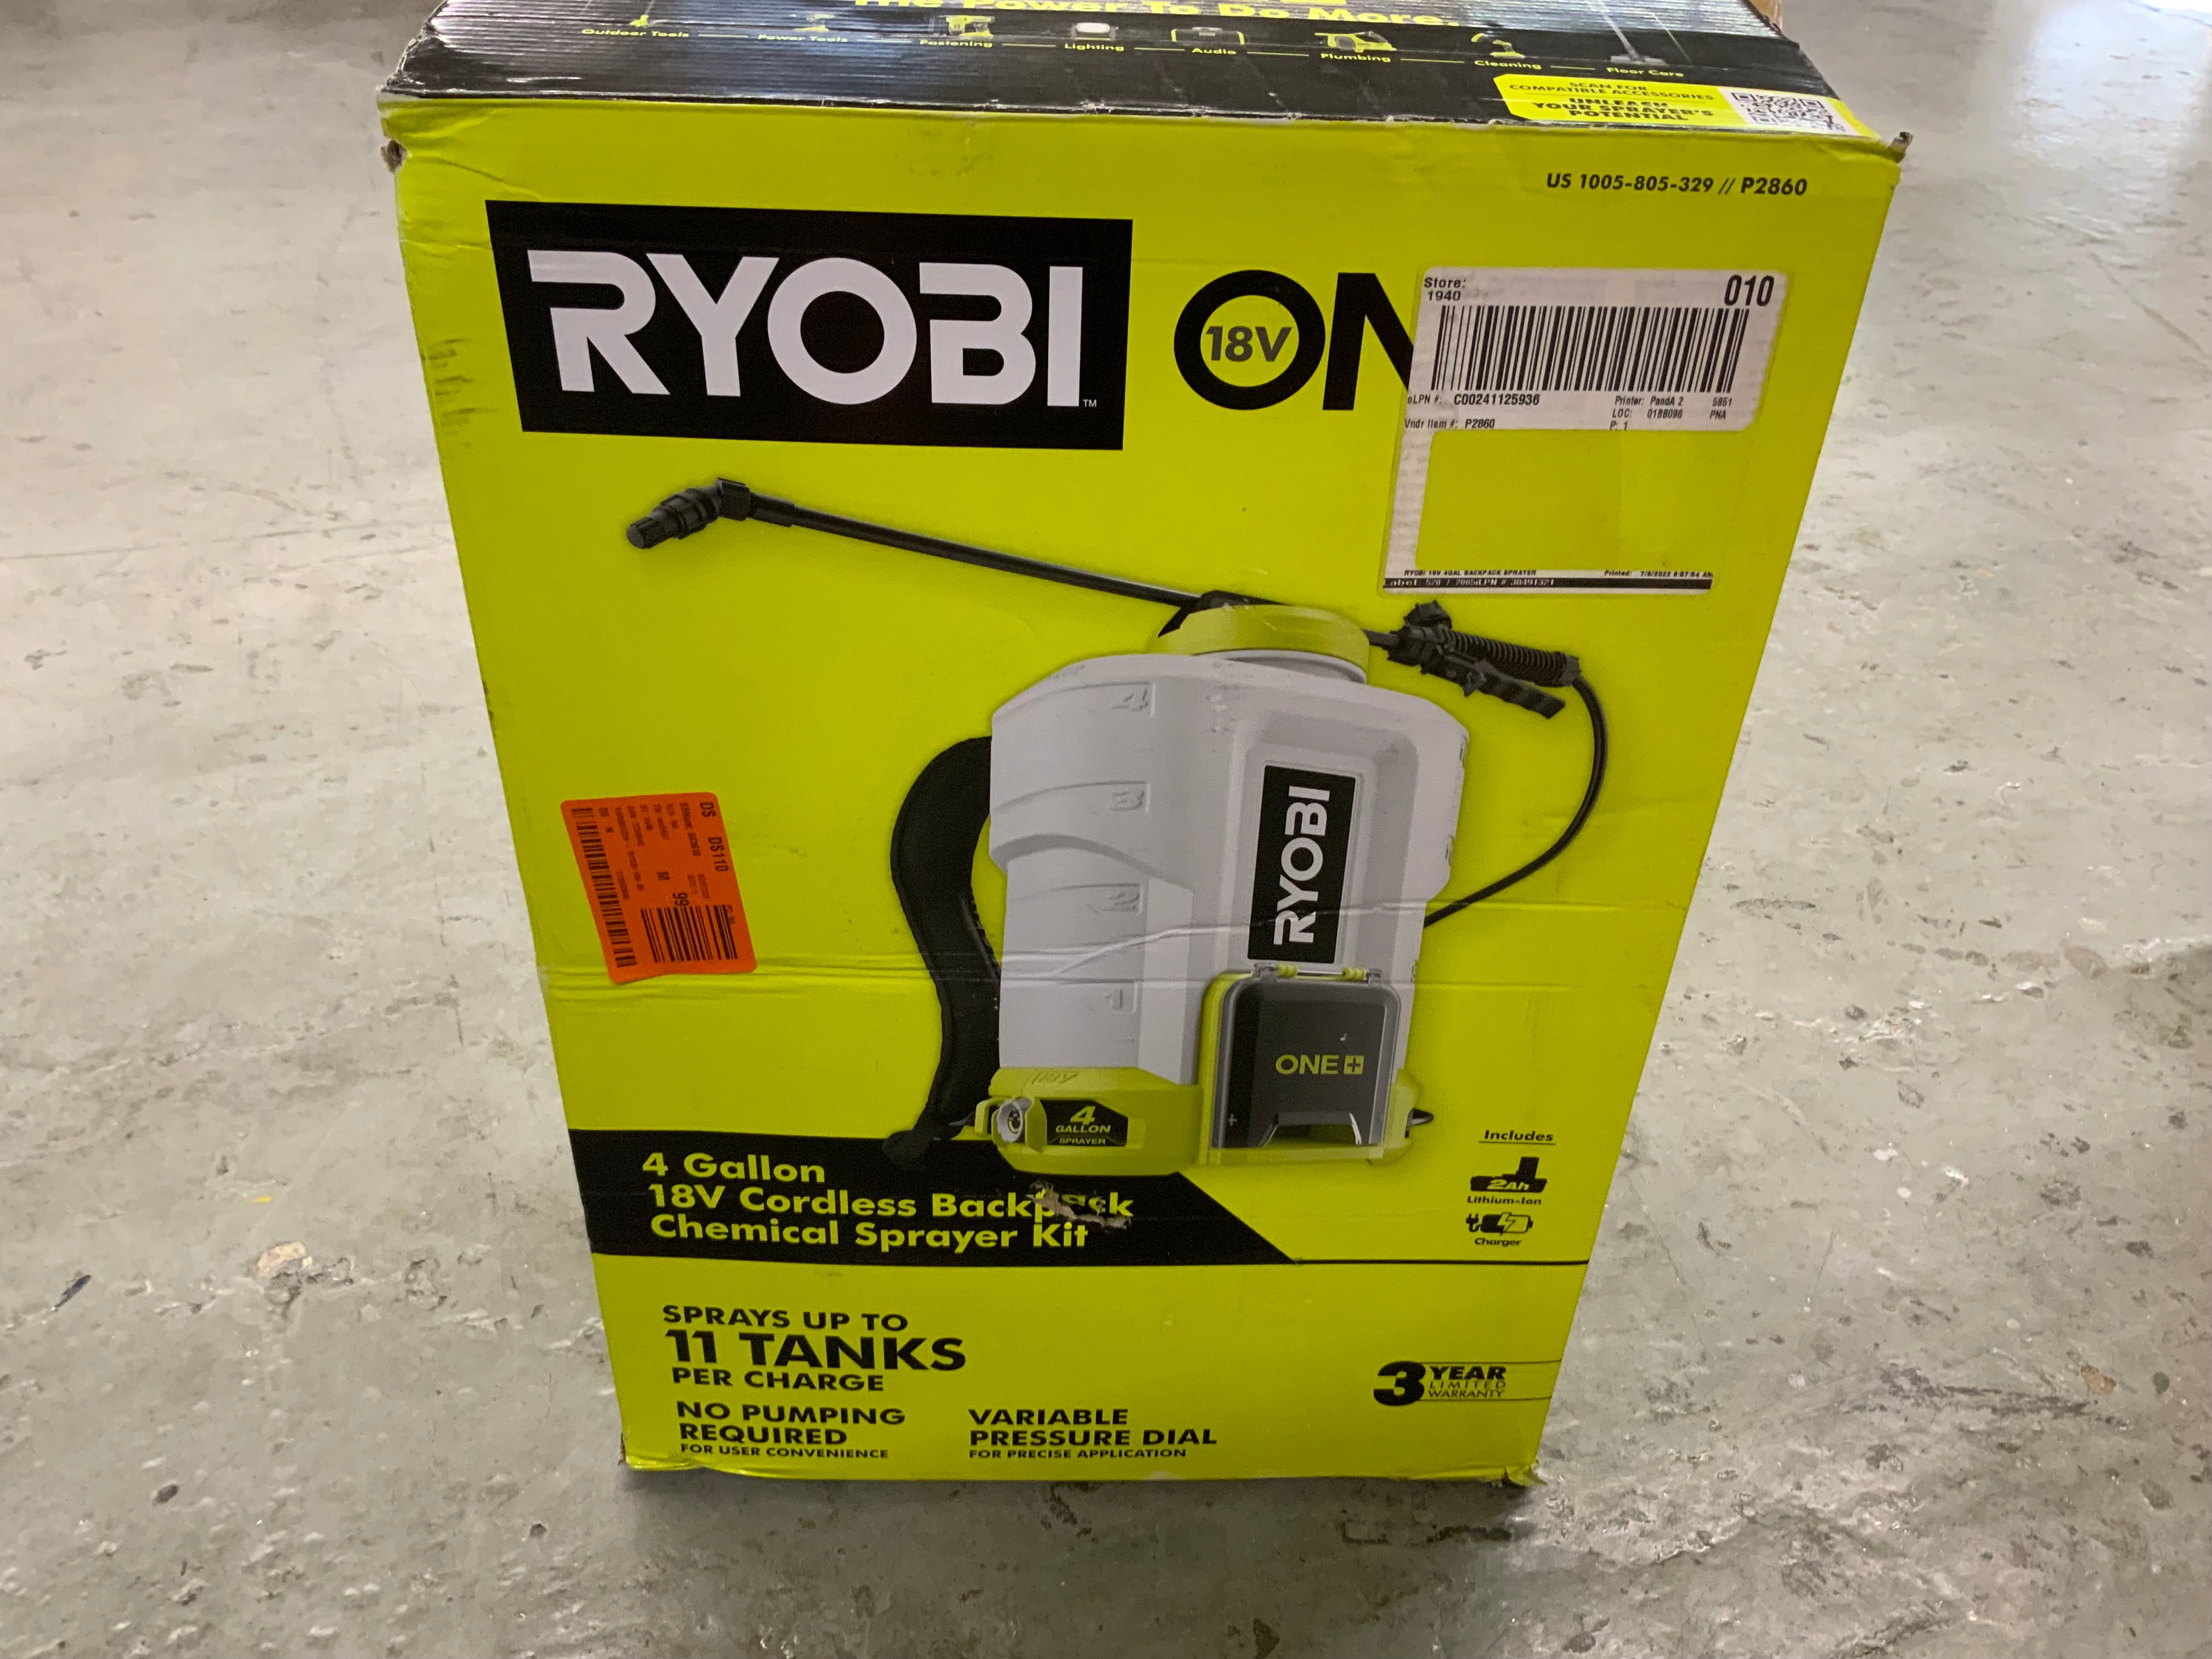 RYOBI ONE+ 18V Cordless Battery 4 Gal. Backpack Chemical Sprayer (8135314637038)